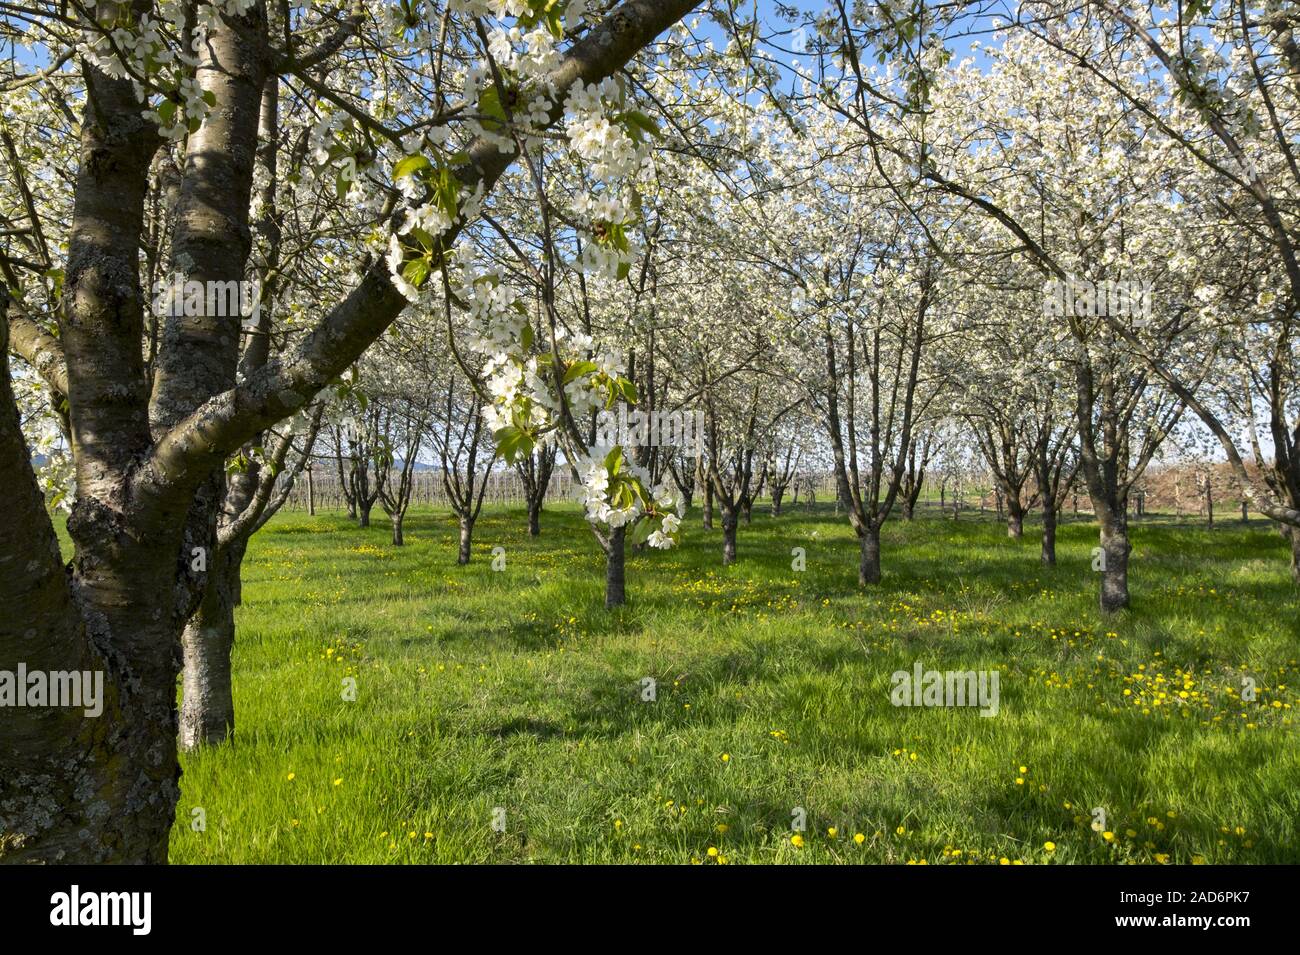 Fruit tree plantation with blossoming cherry trees (Prunus avium) Stock Photo